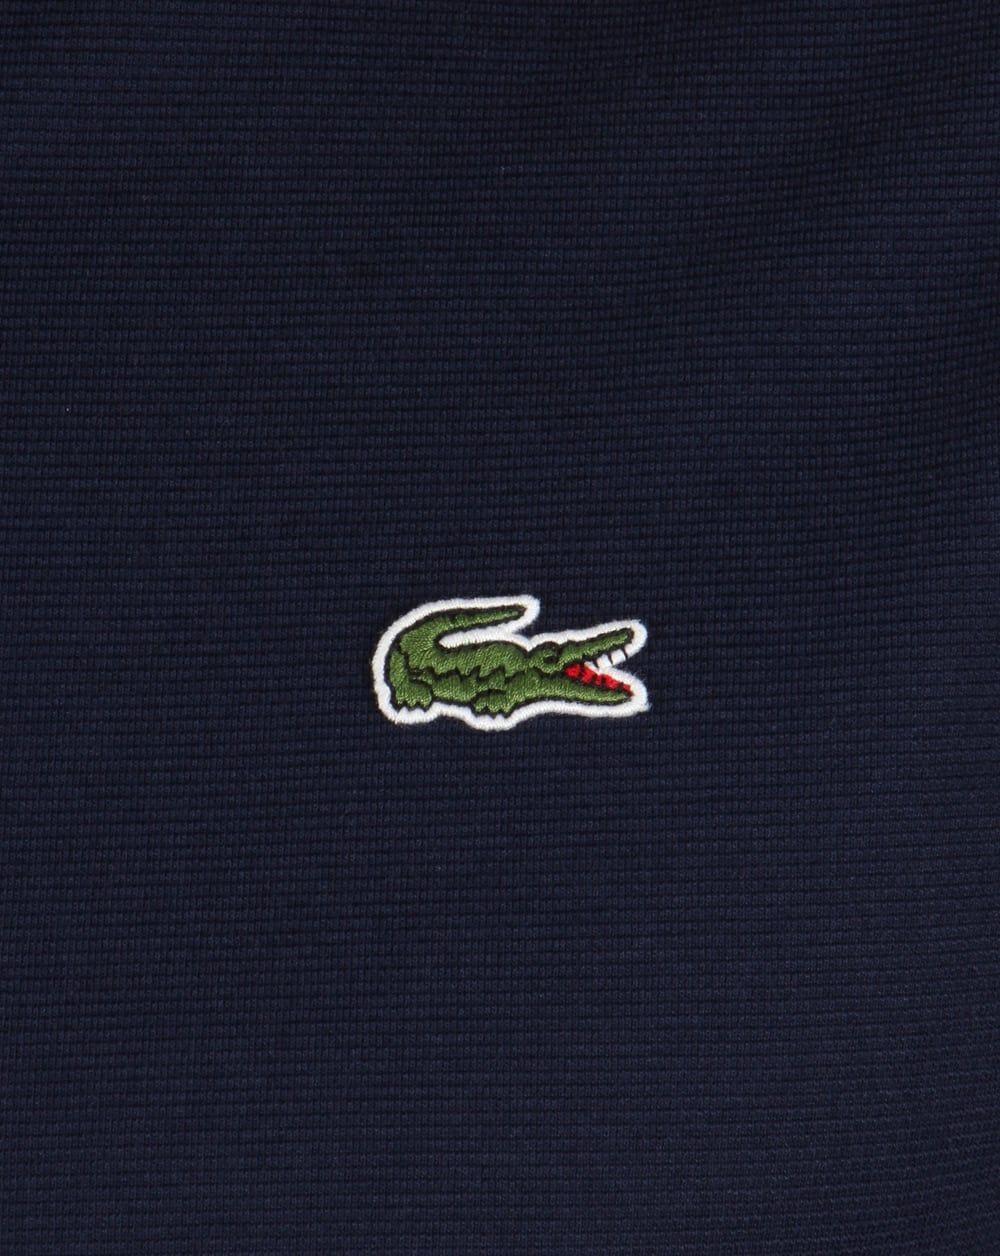 Lacoste Shirt Logo - Lacoste Polo Shirt Navy, short, sleeve, old skool, retro